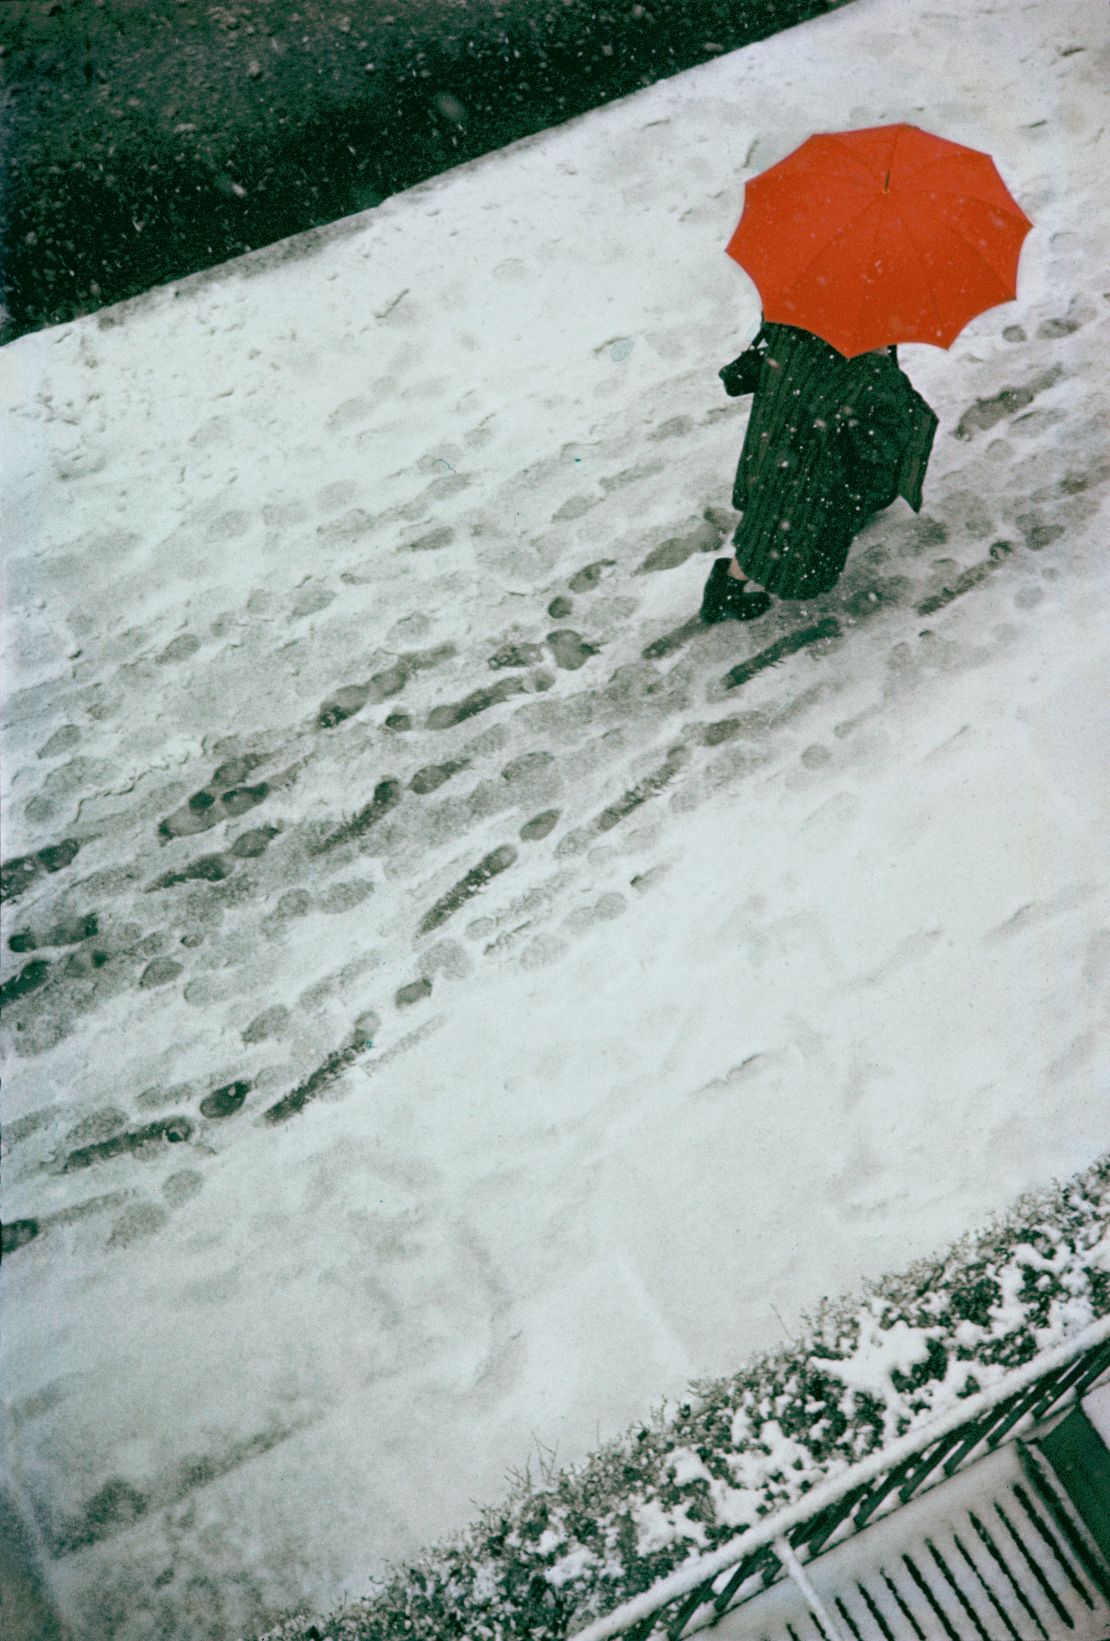 Leiter's iconic image "Footprints," taken around 1950. His work often featured umbrellas.